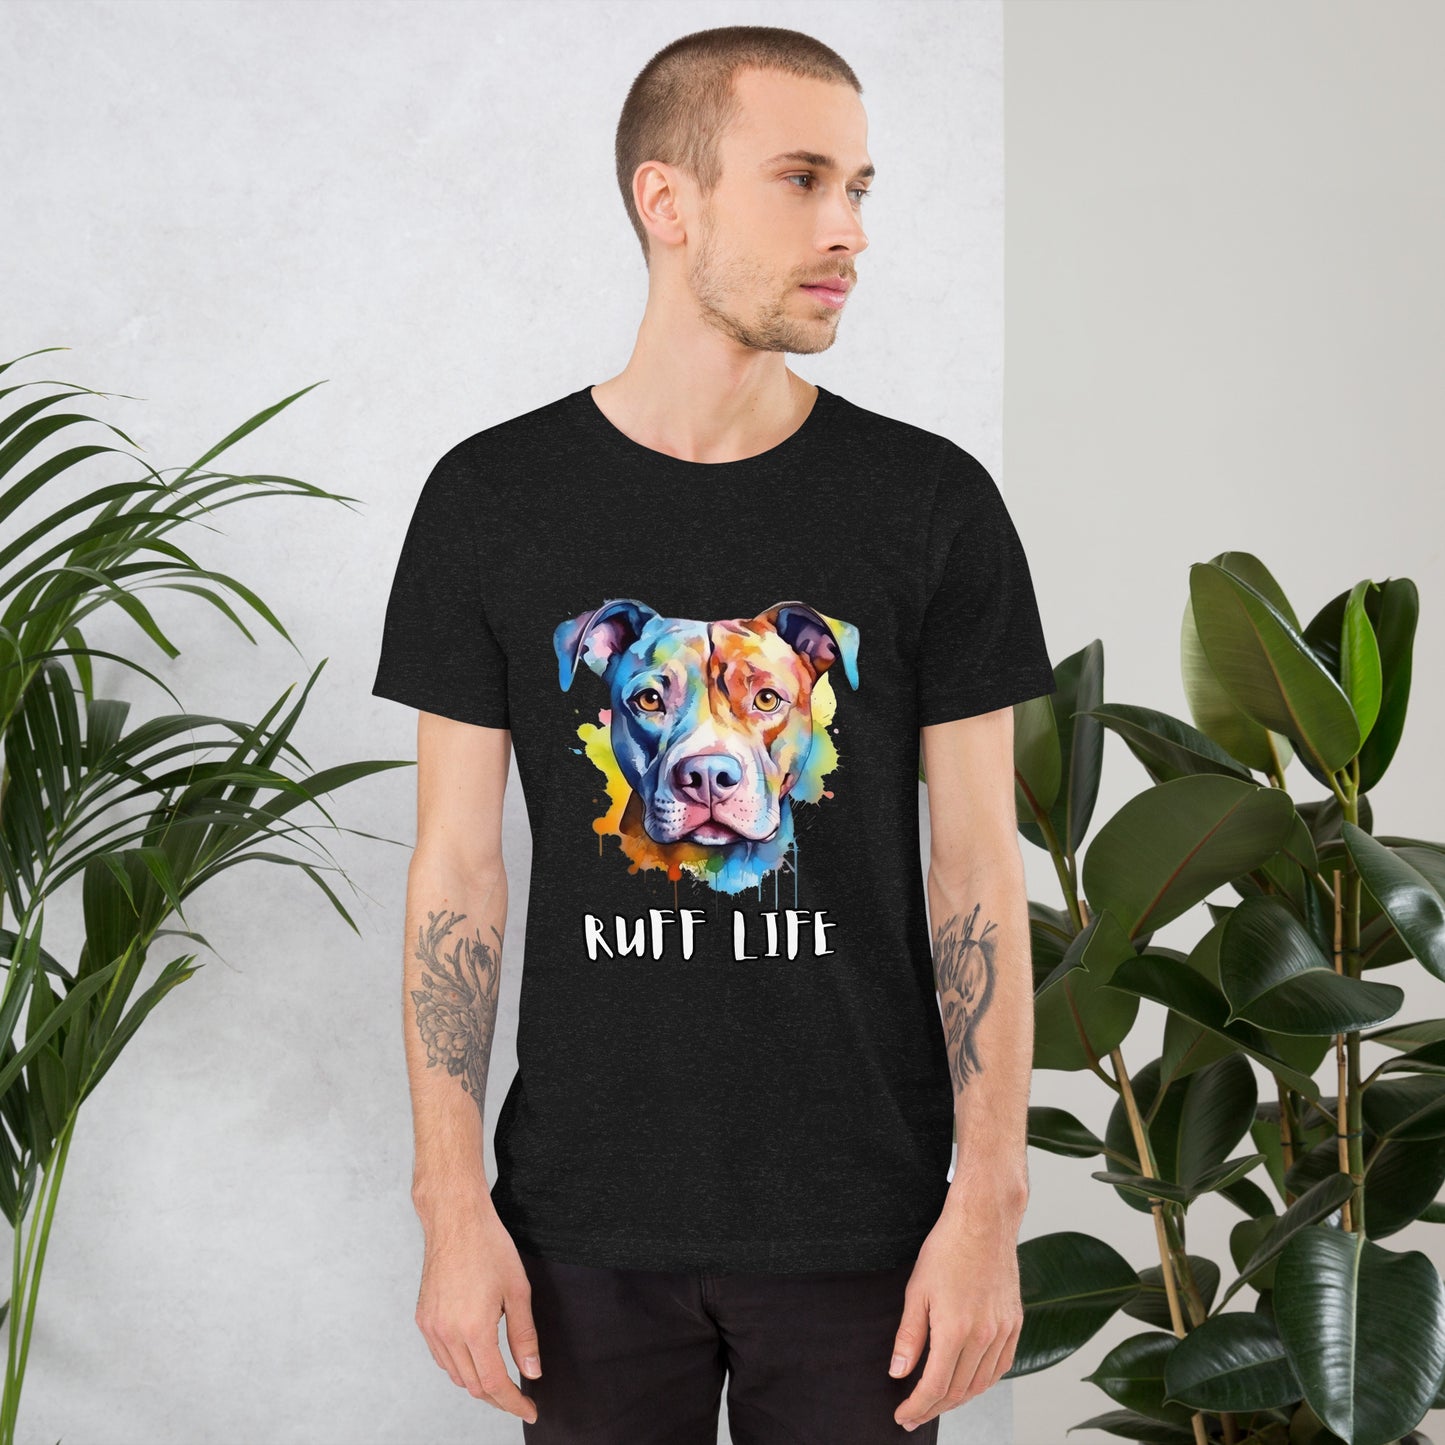 Ruff life Unisex t-shirt